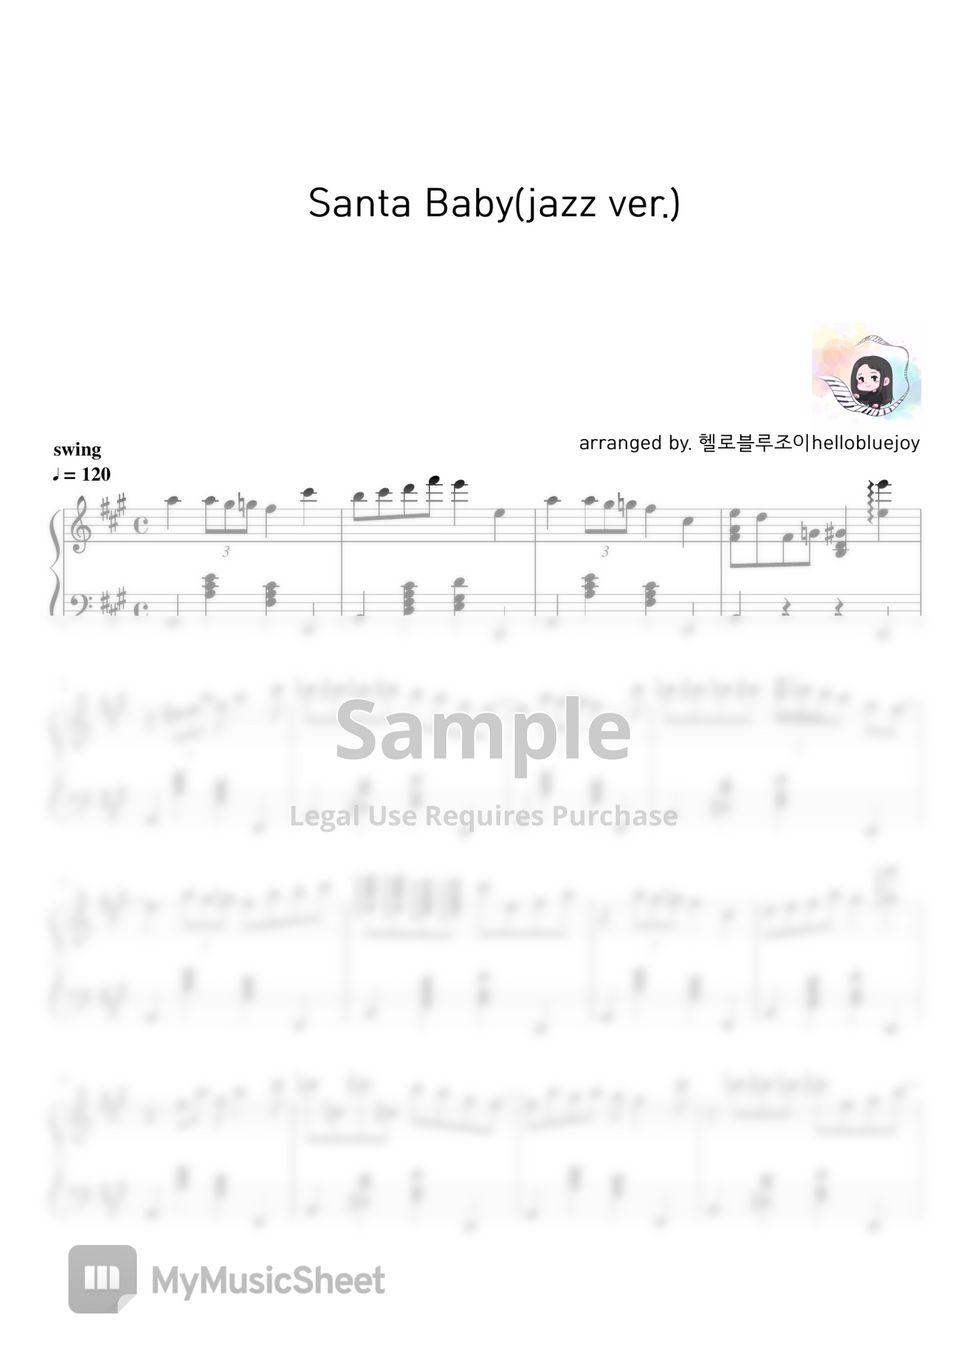 Christmas Song - Santa Baby (jazz ver.) by 헬로블루조이